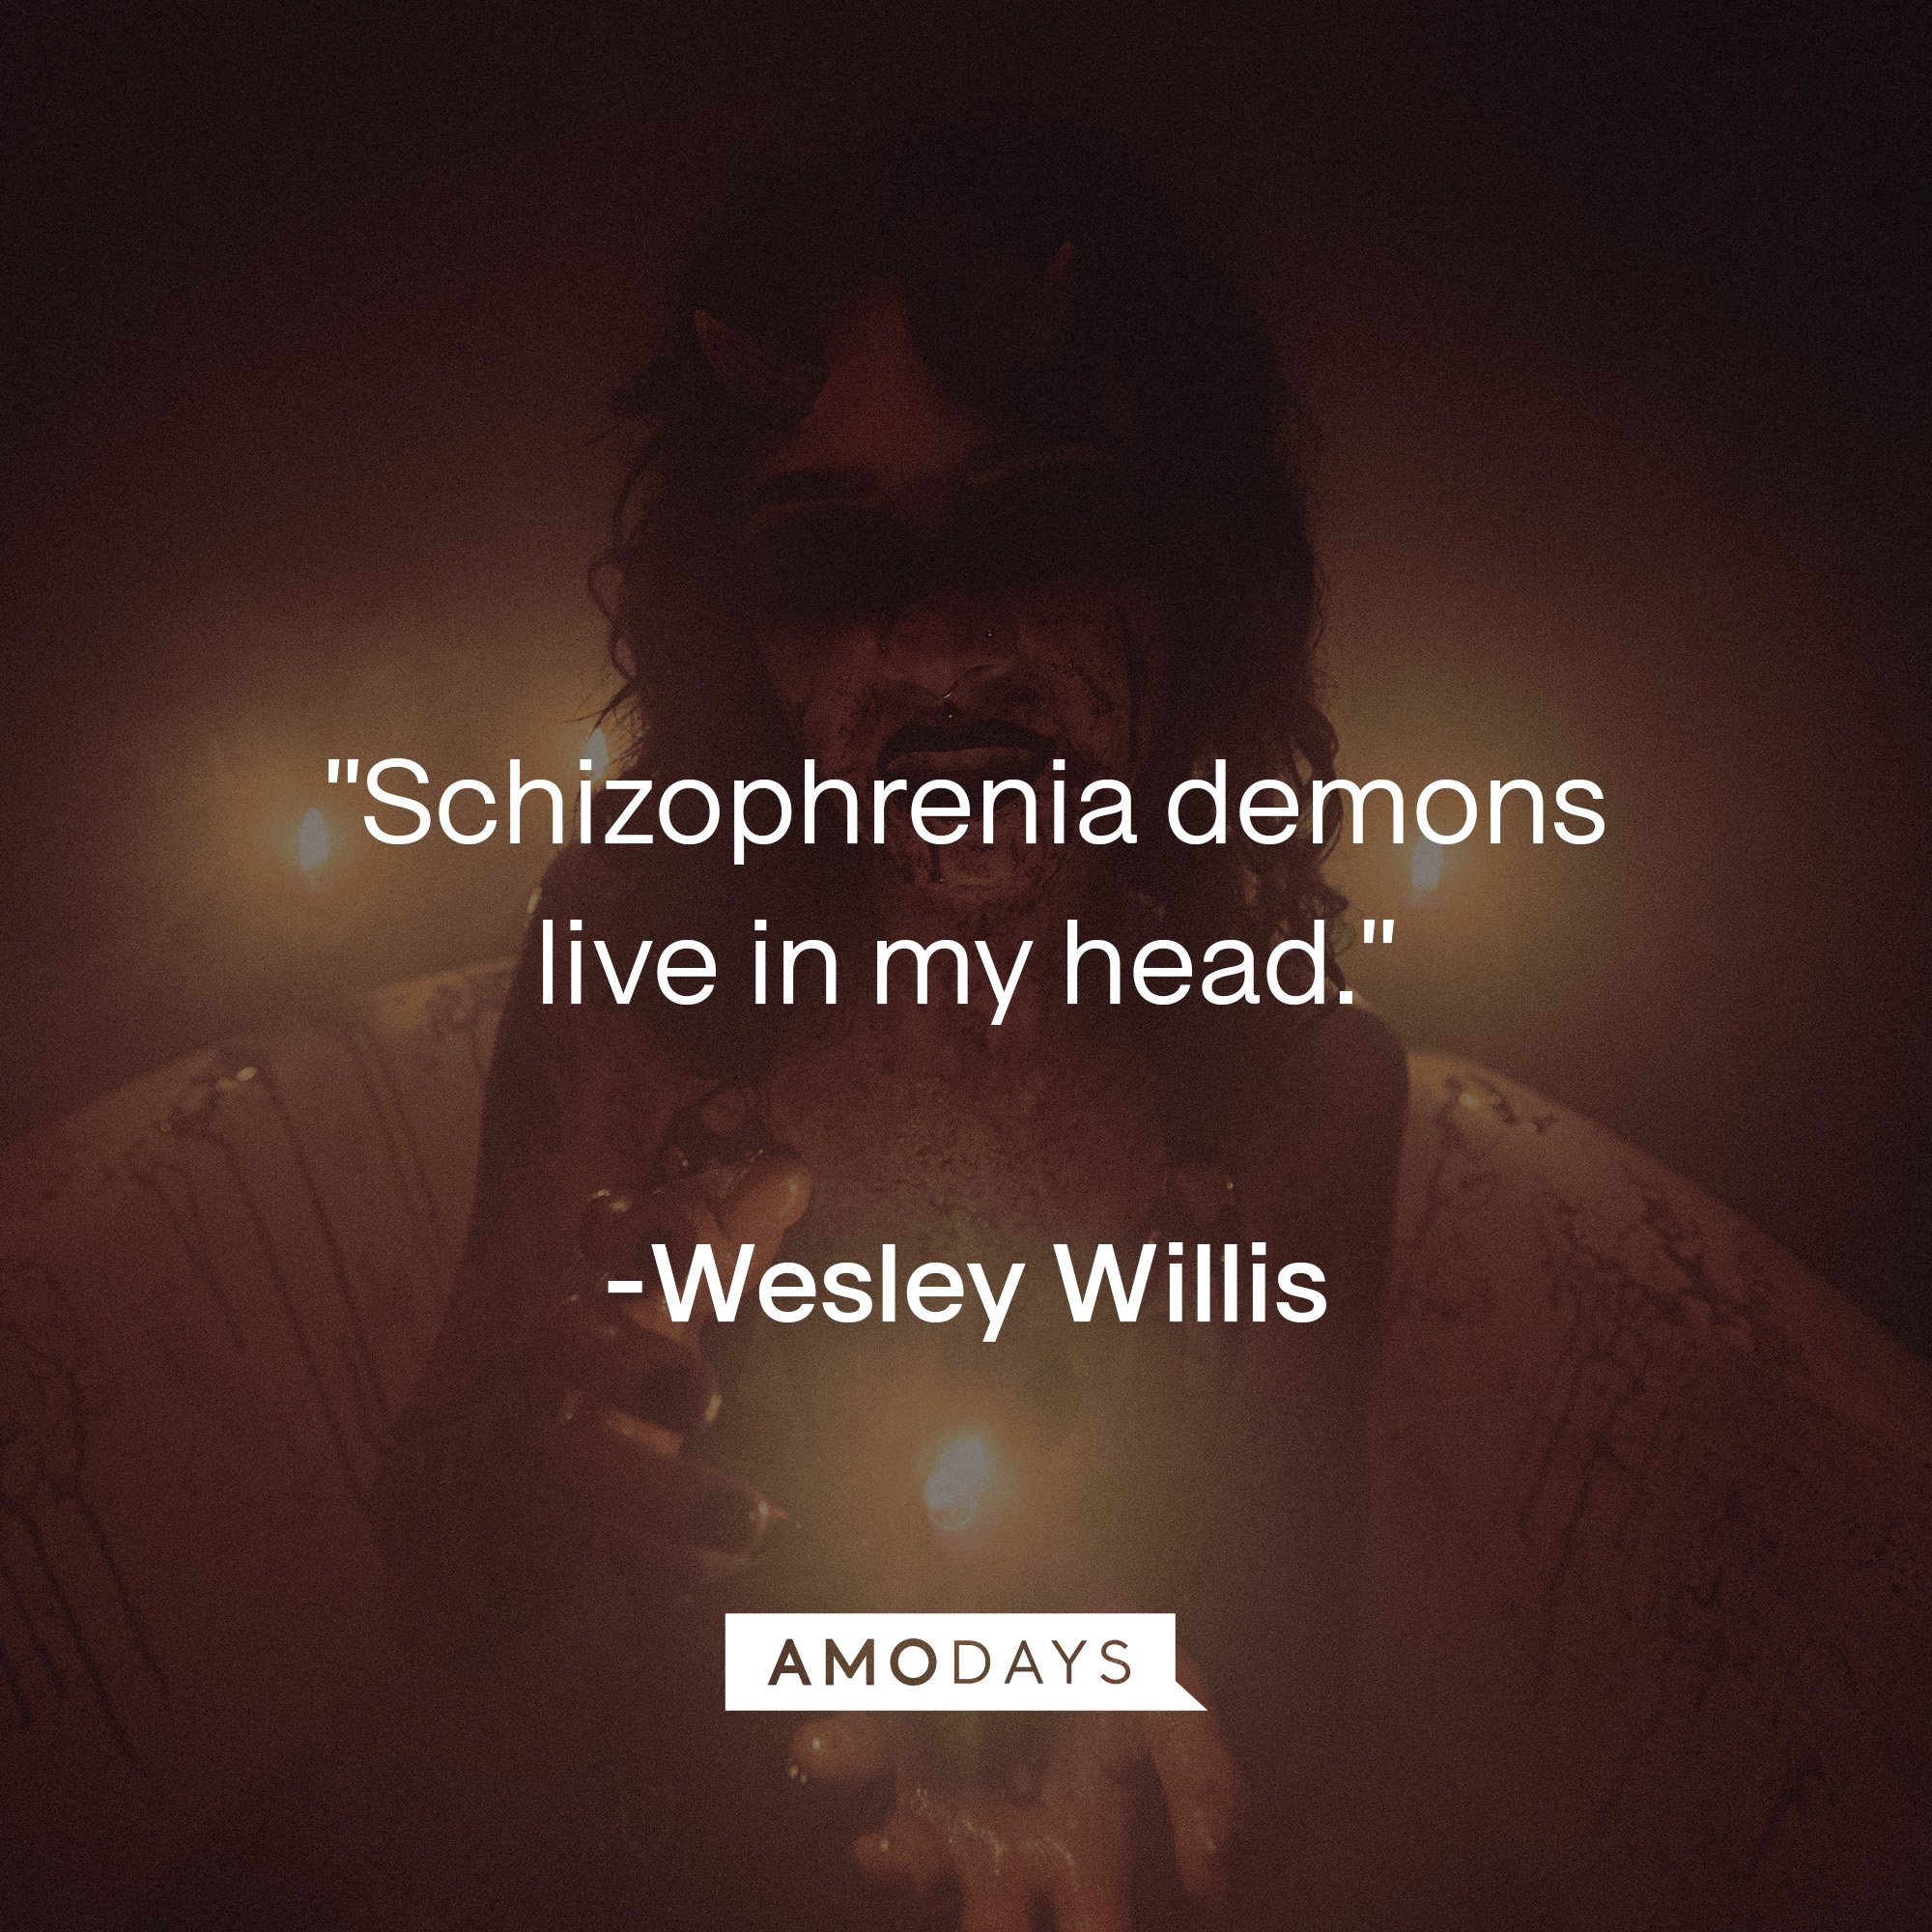 Wesley Willis’ quote: "Schizophrenia demons live in my head." | Image: AmoDays